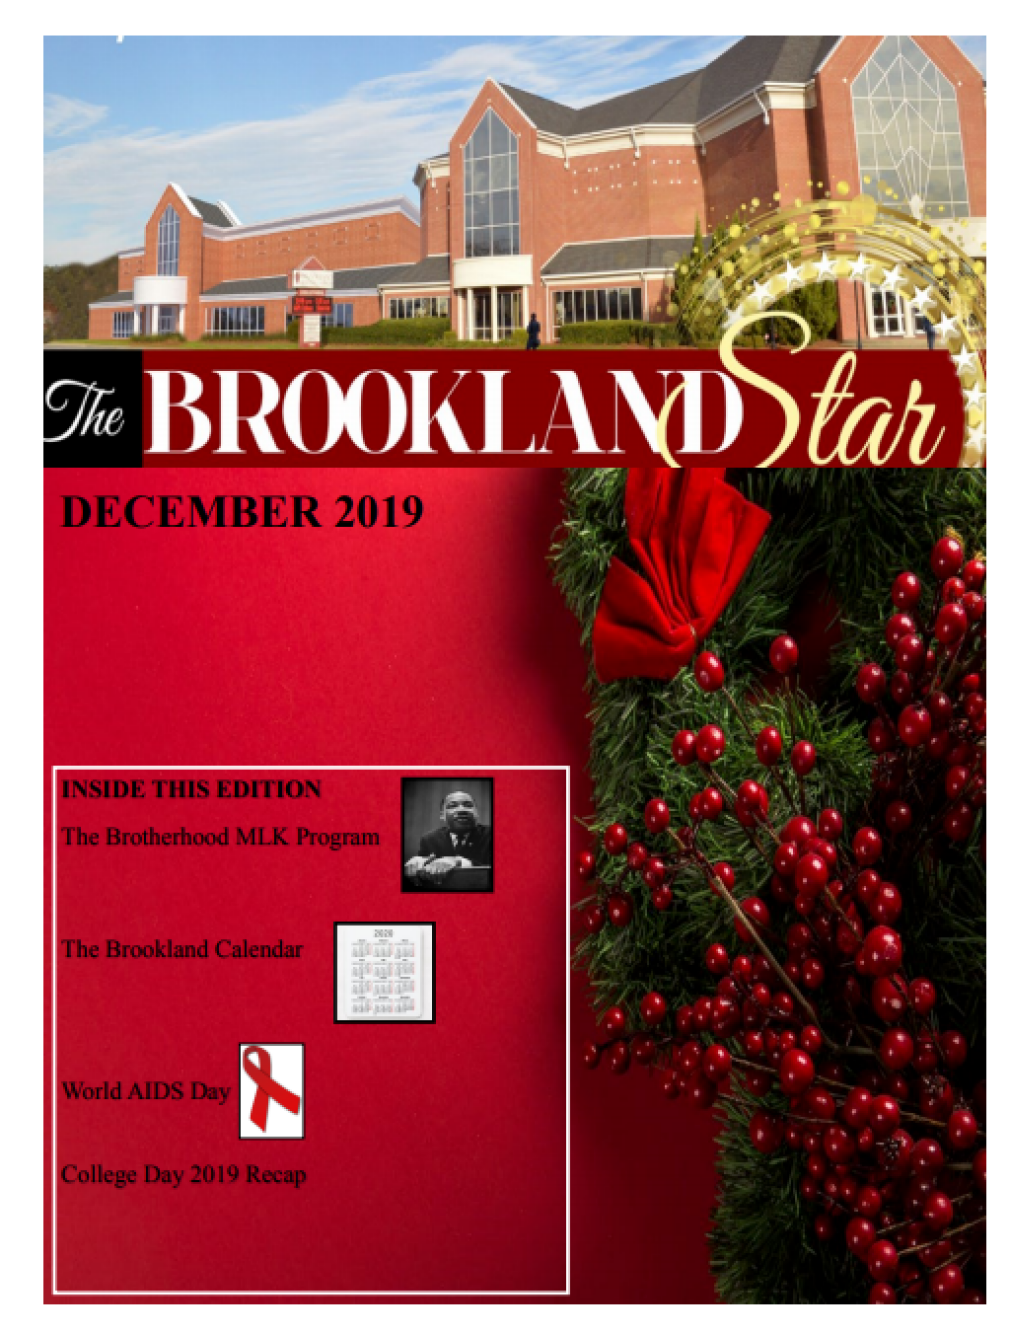 The Brookland Star December 2019 Edition